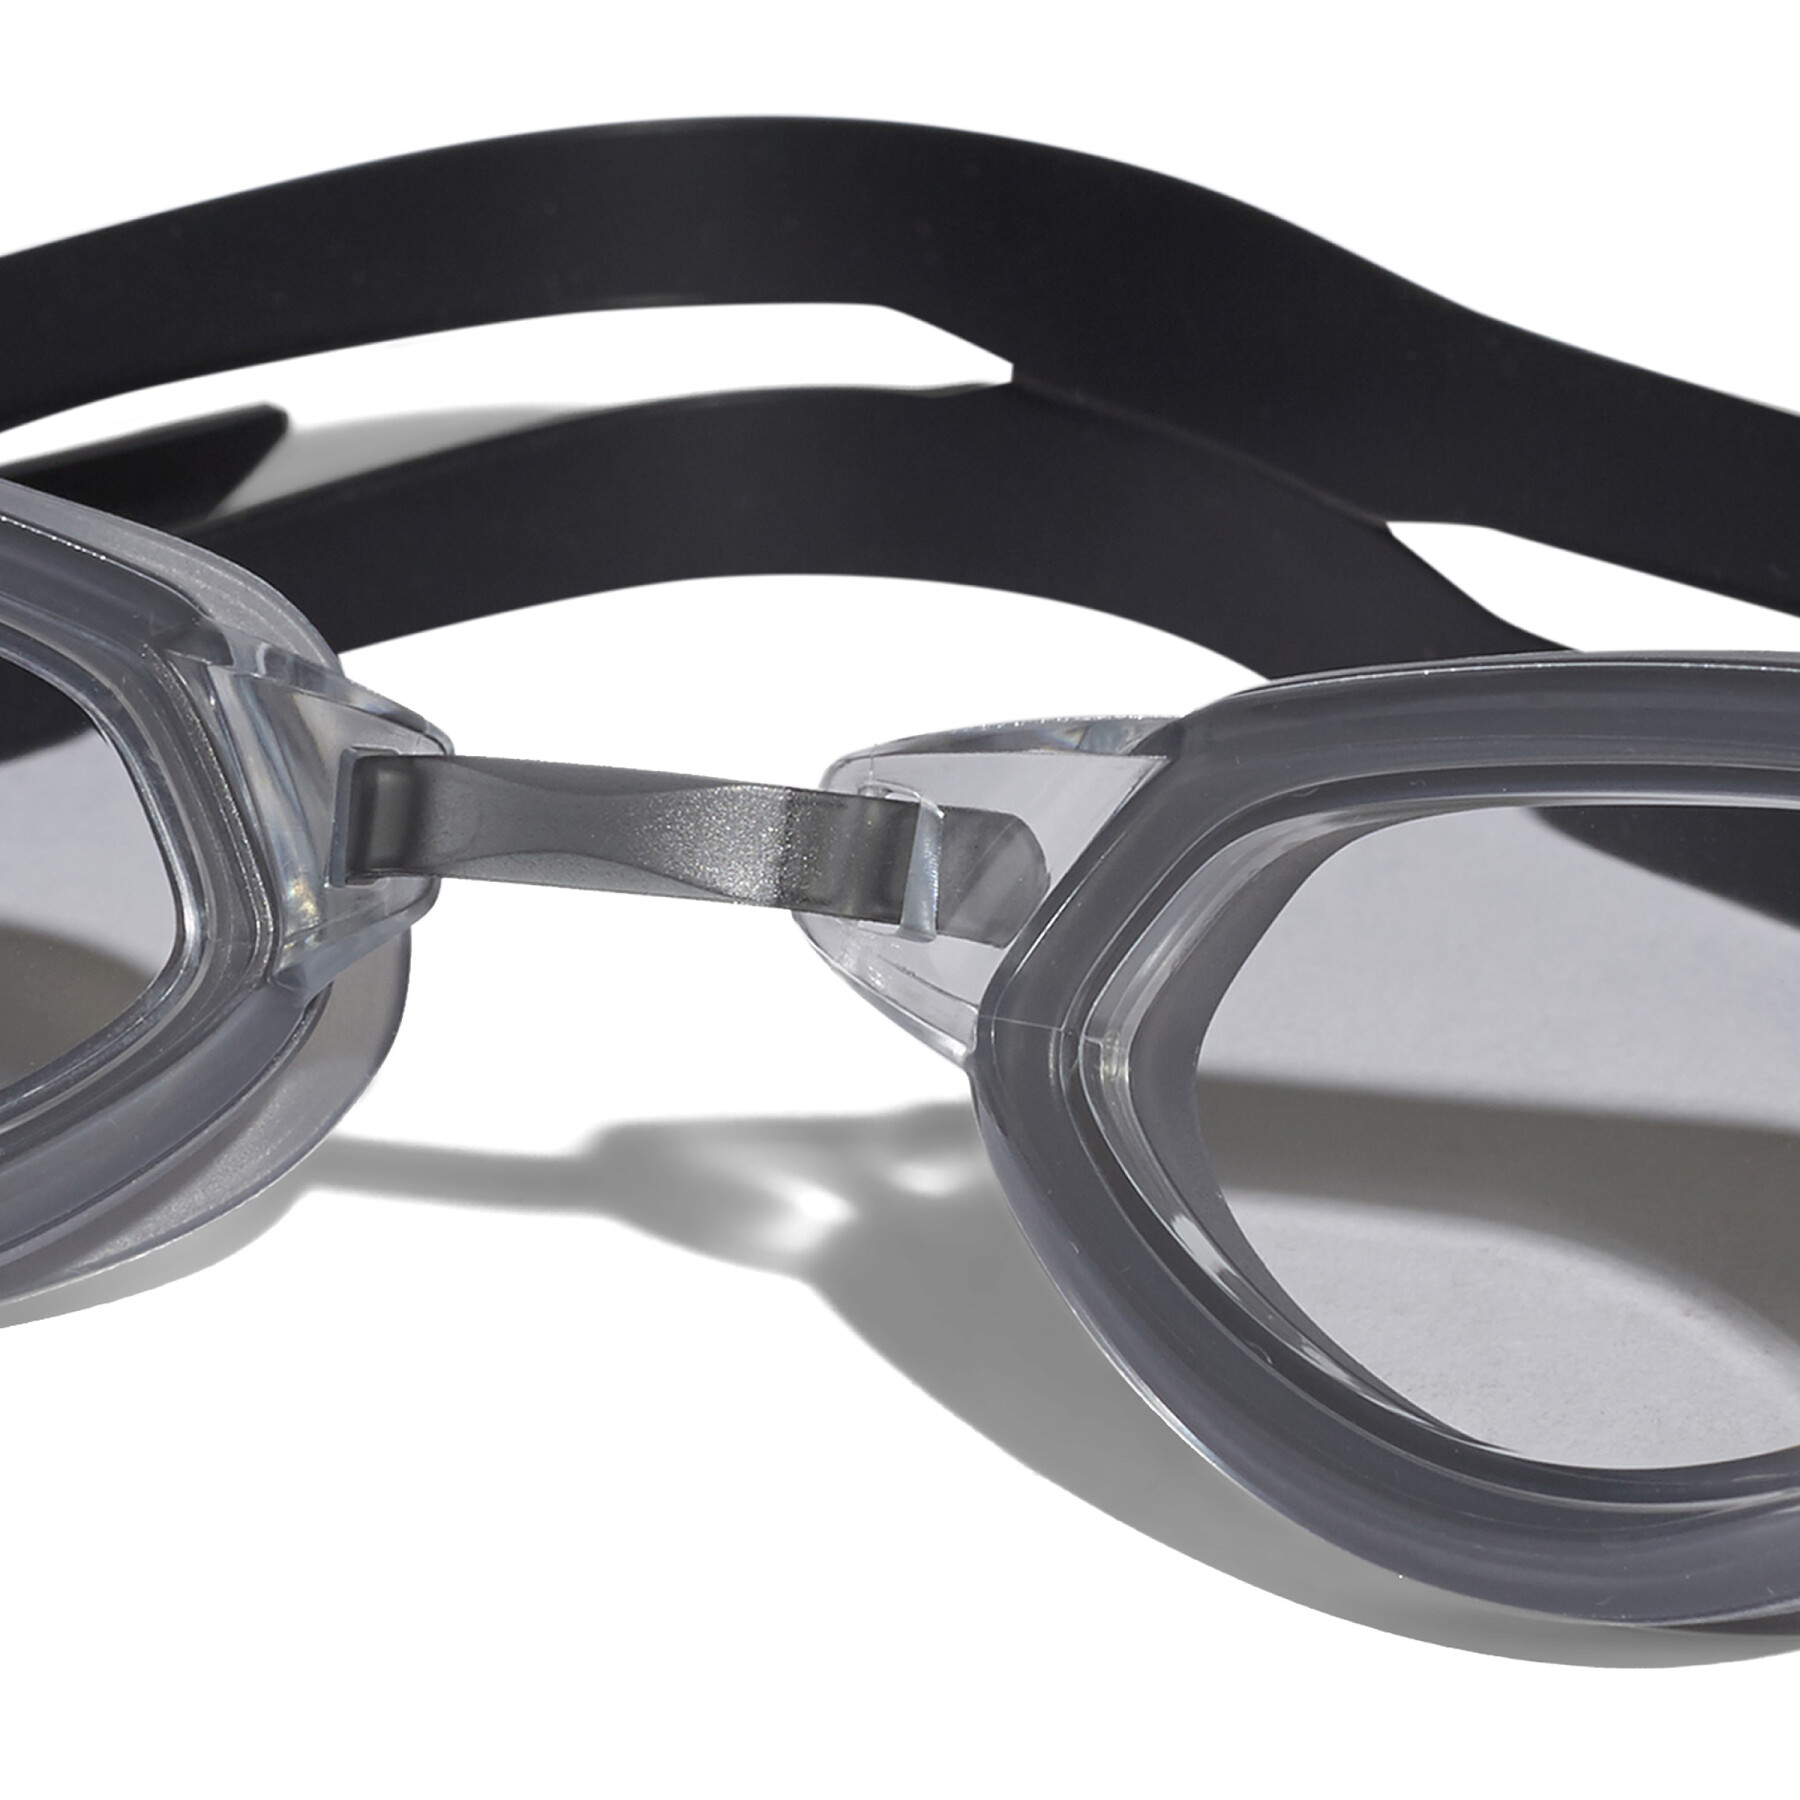 Óculos de natação adidas Persistar Fit Unmirrored